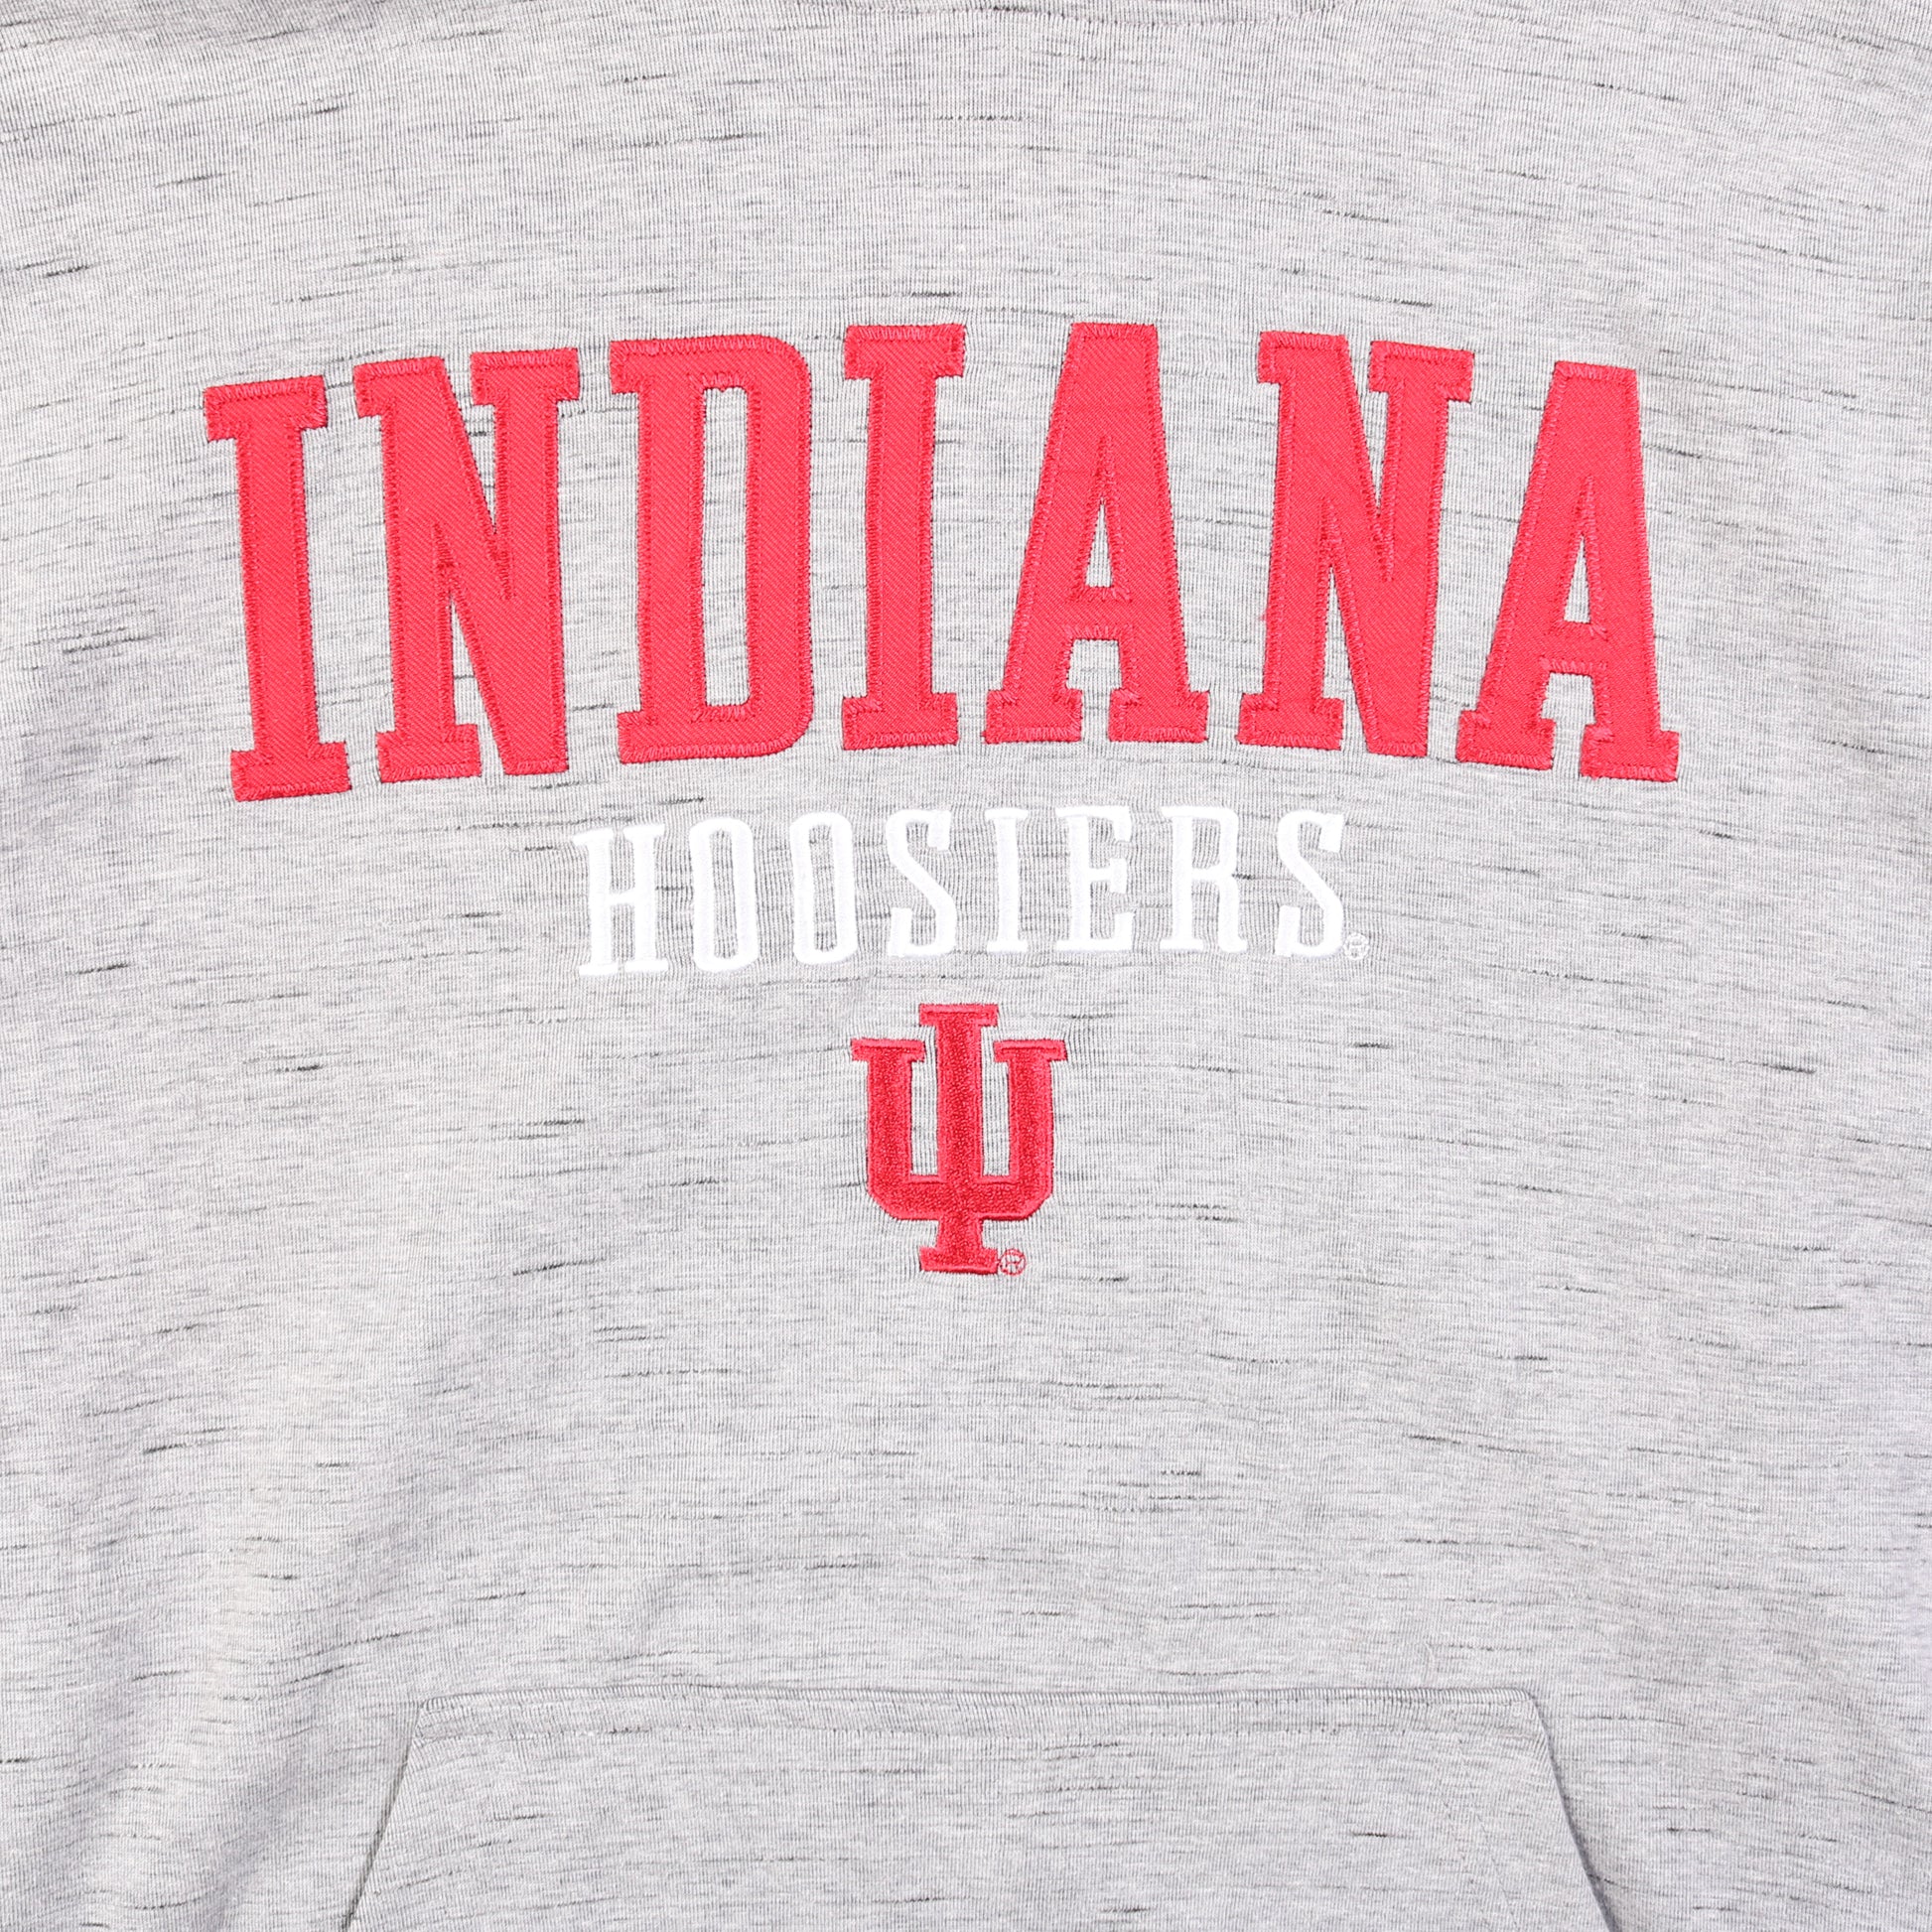 Vintage 'Indiana' Champion Hooded Sweatshirt - American Madness